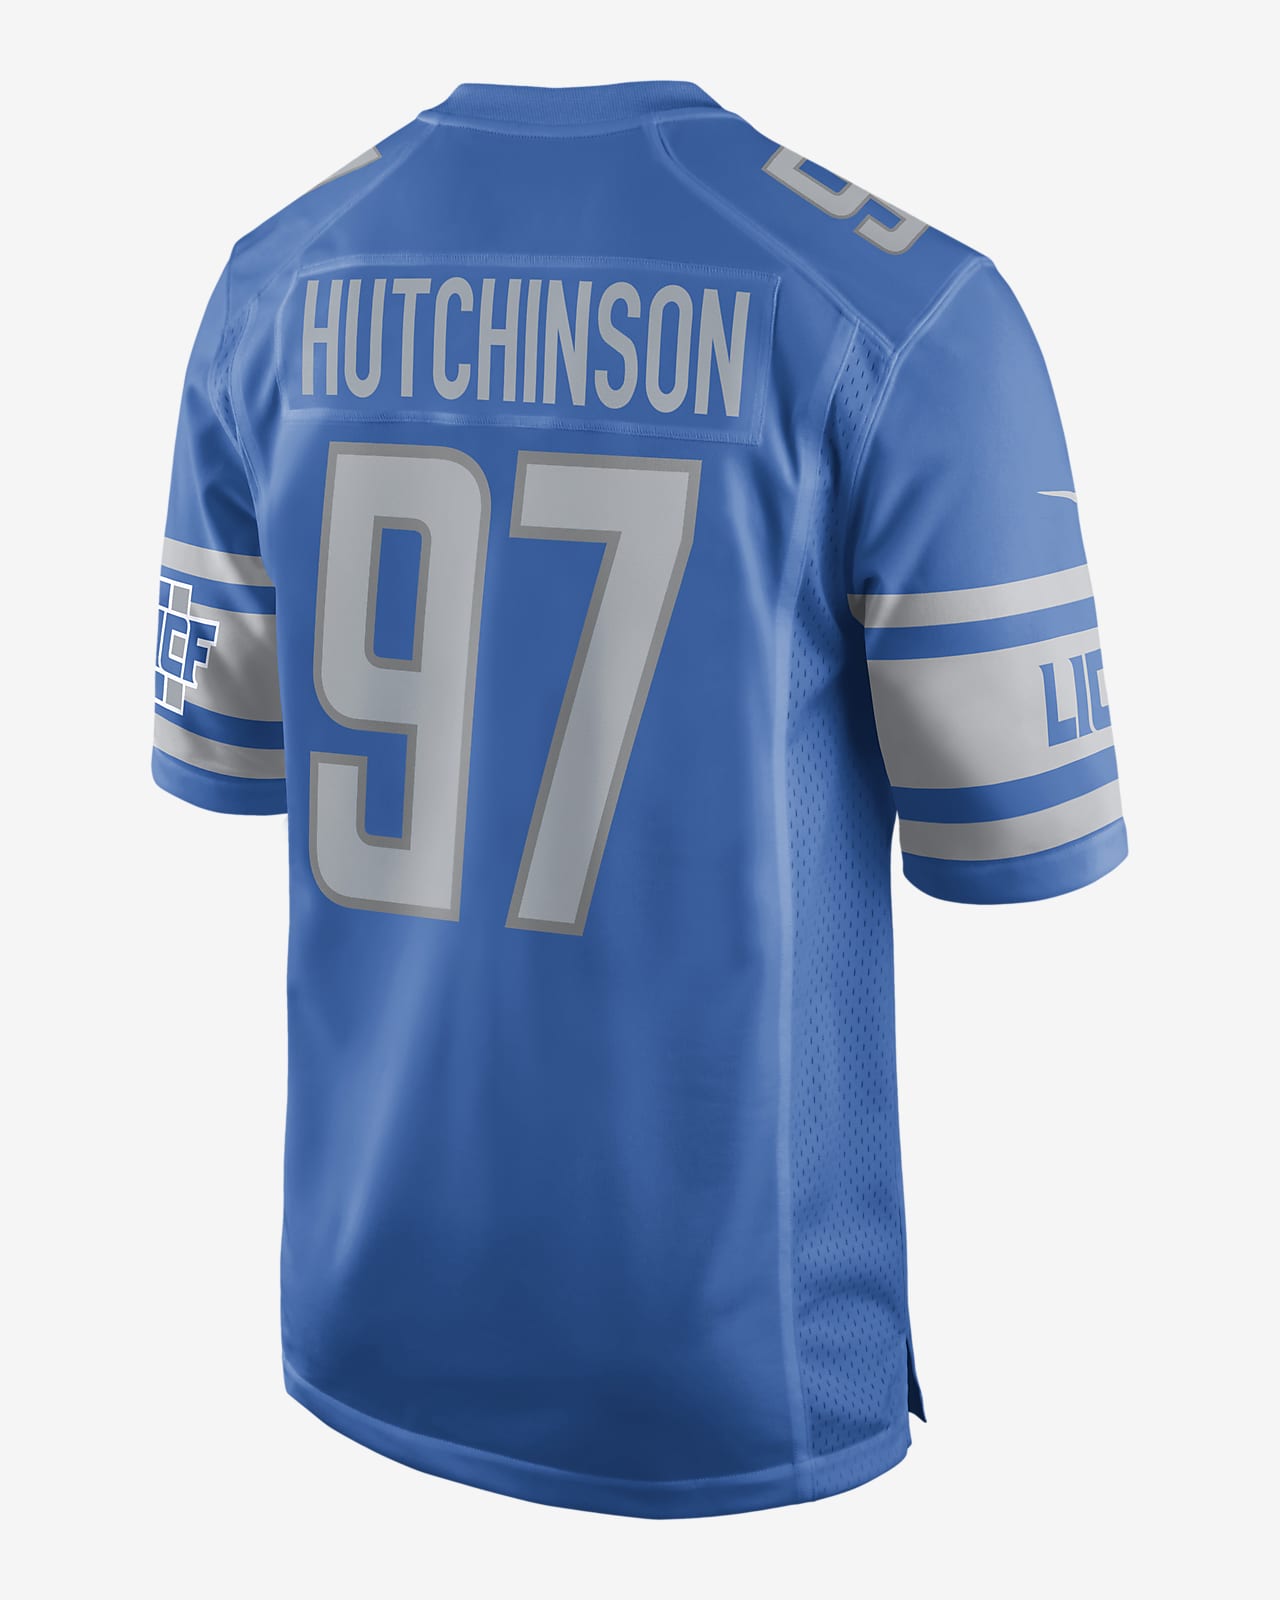 aidan hutchinson lions jersey